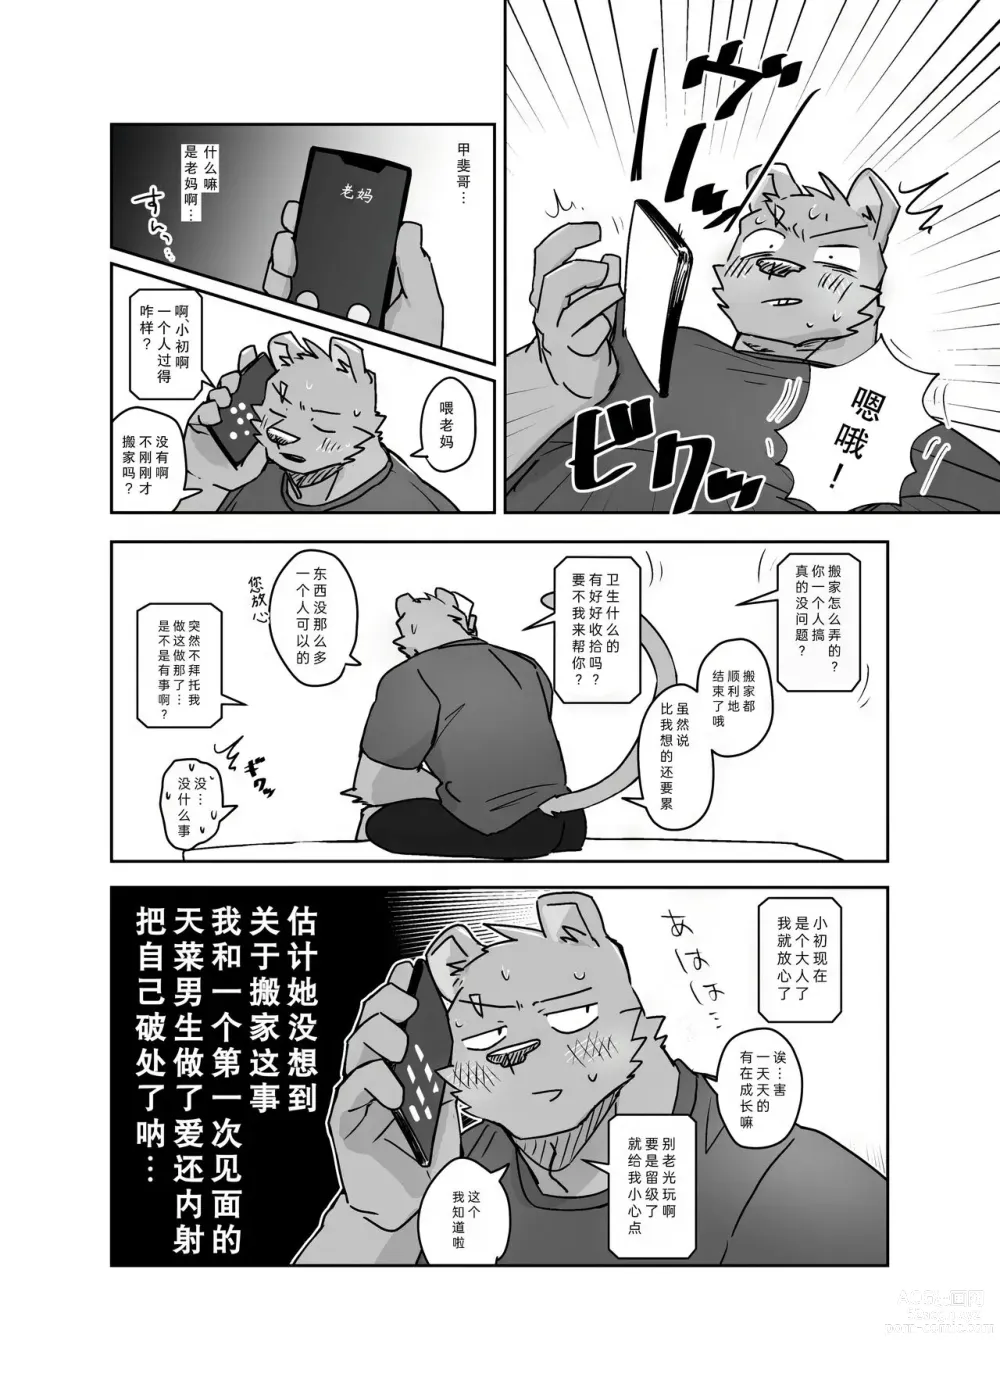 Page 6 of manga 【后续漫画】那一天的夜晚